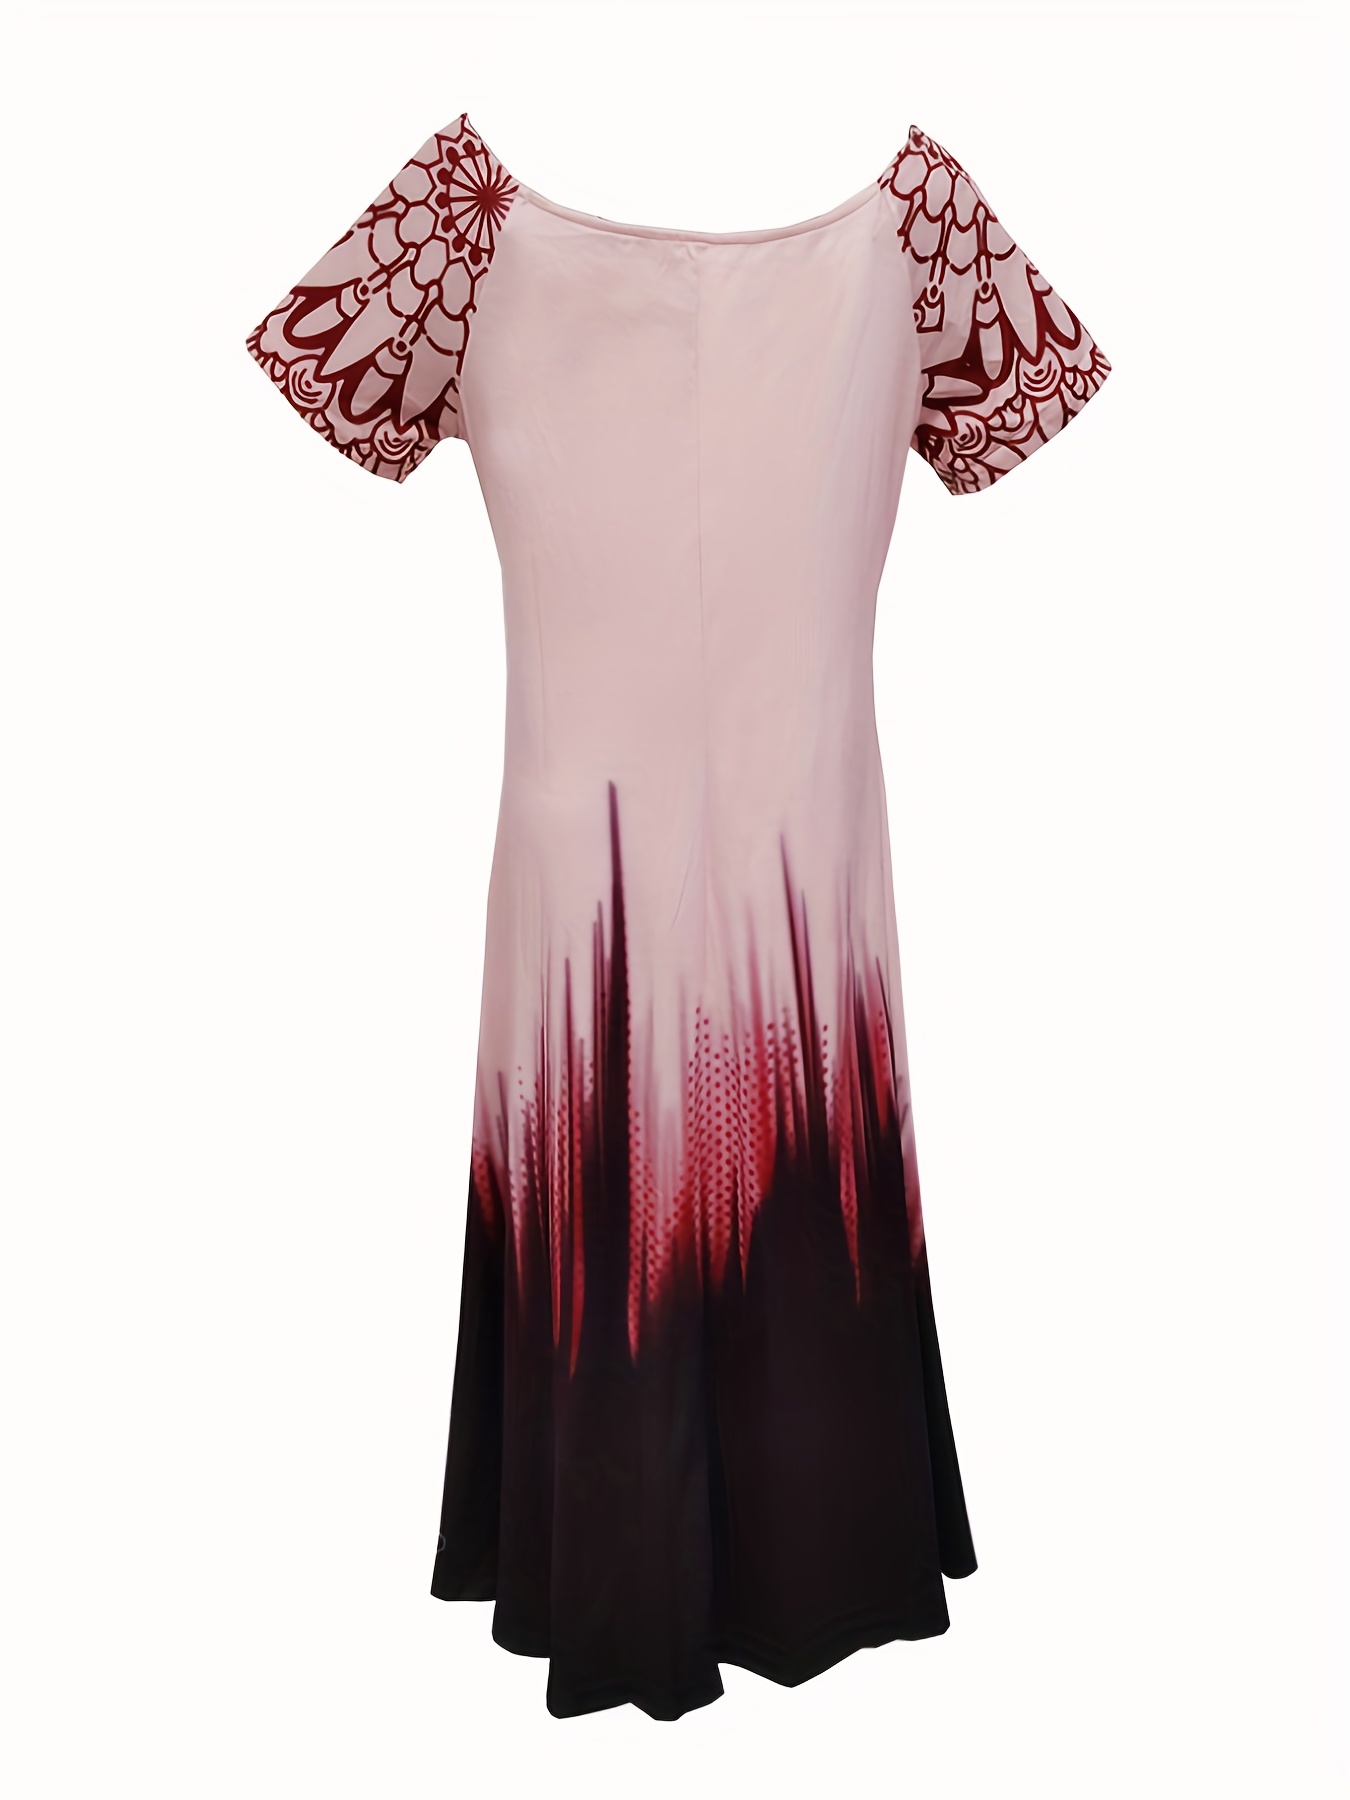 floral print gradient dress casual v neck short sleeve maxi dress womens clothing